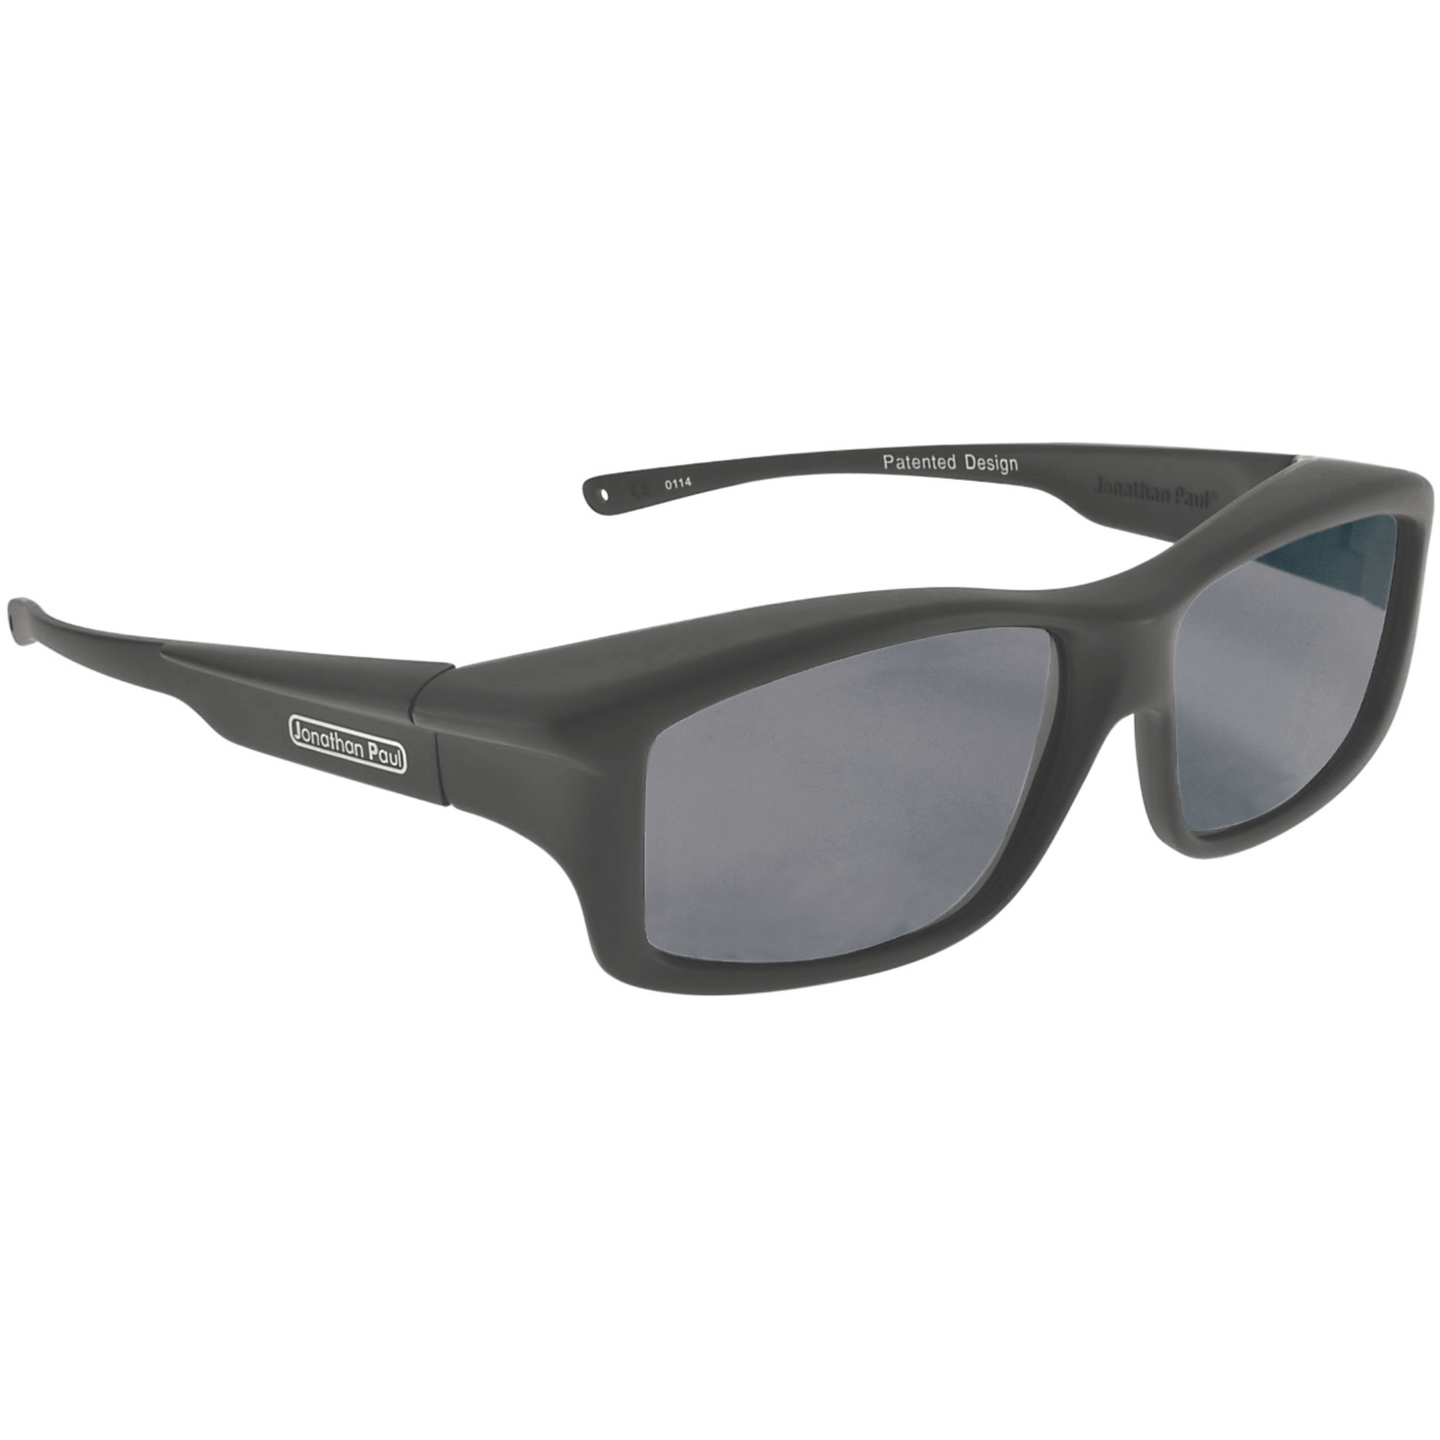 Fitover Sunglasses 'Yamba' Satin Black - Grey Lens